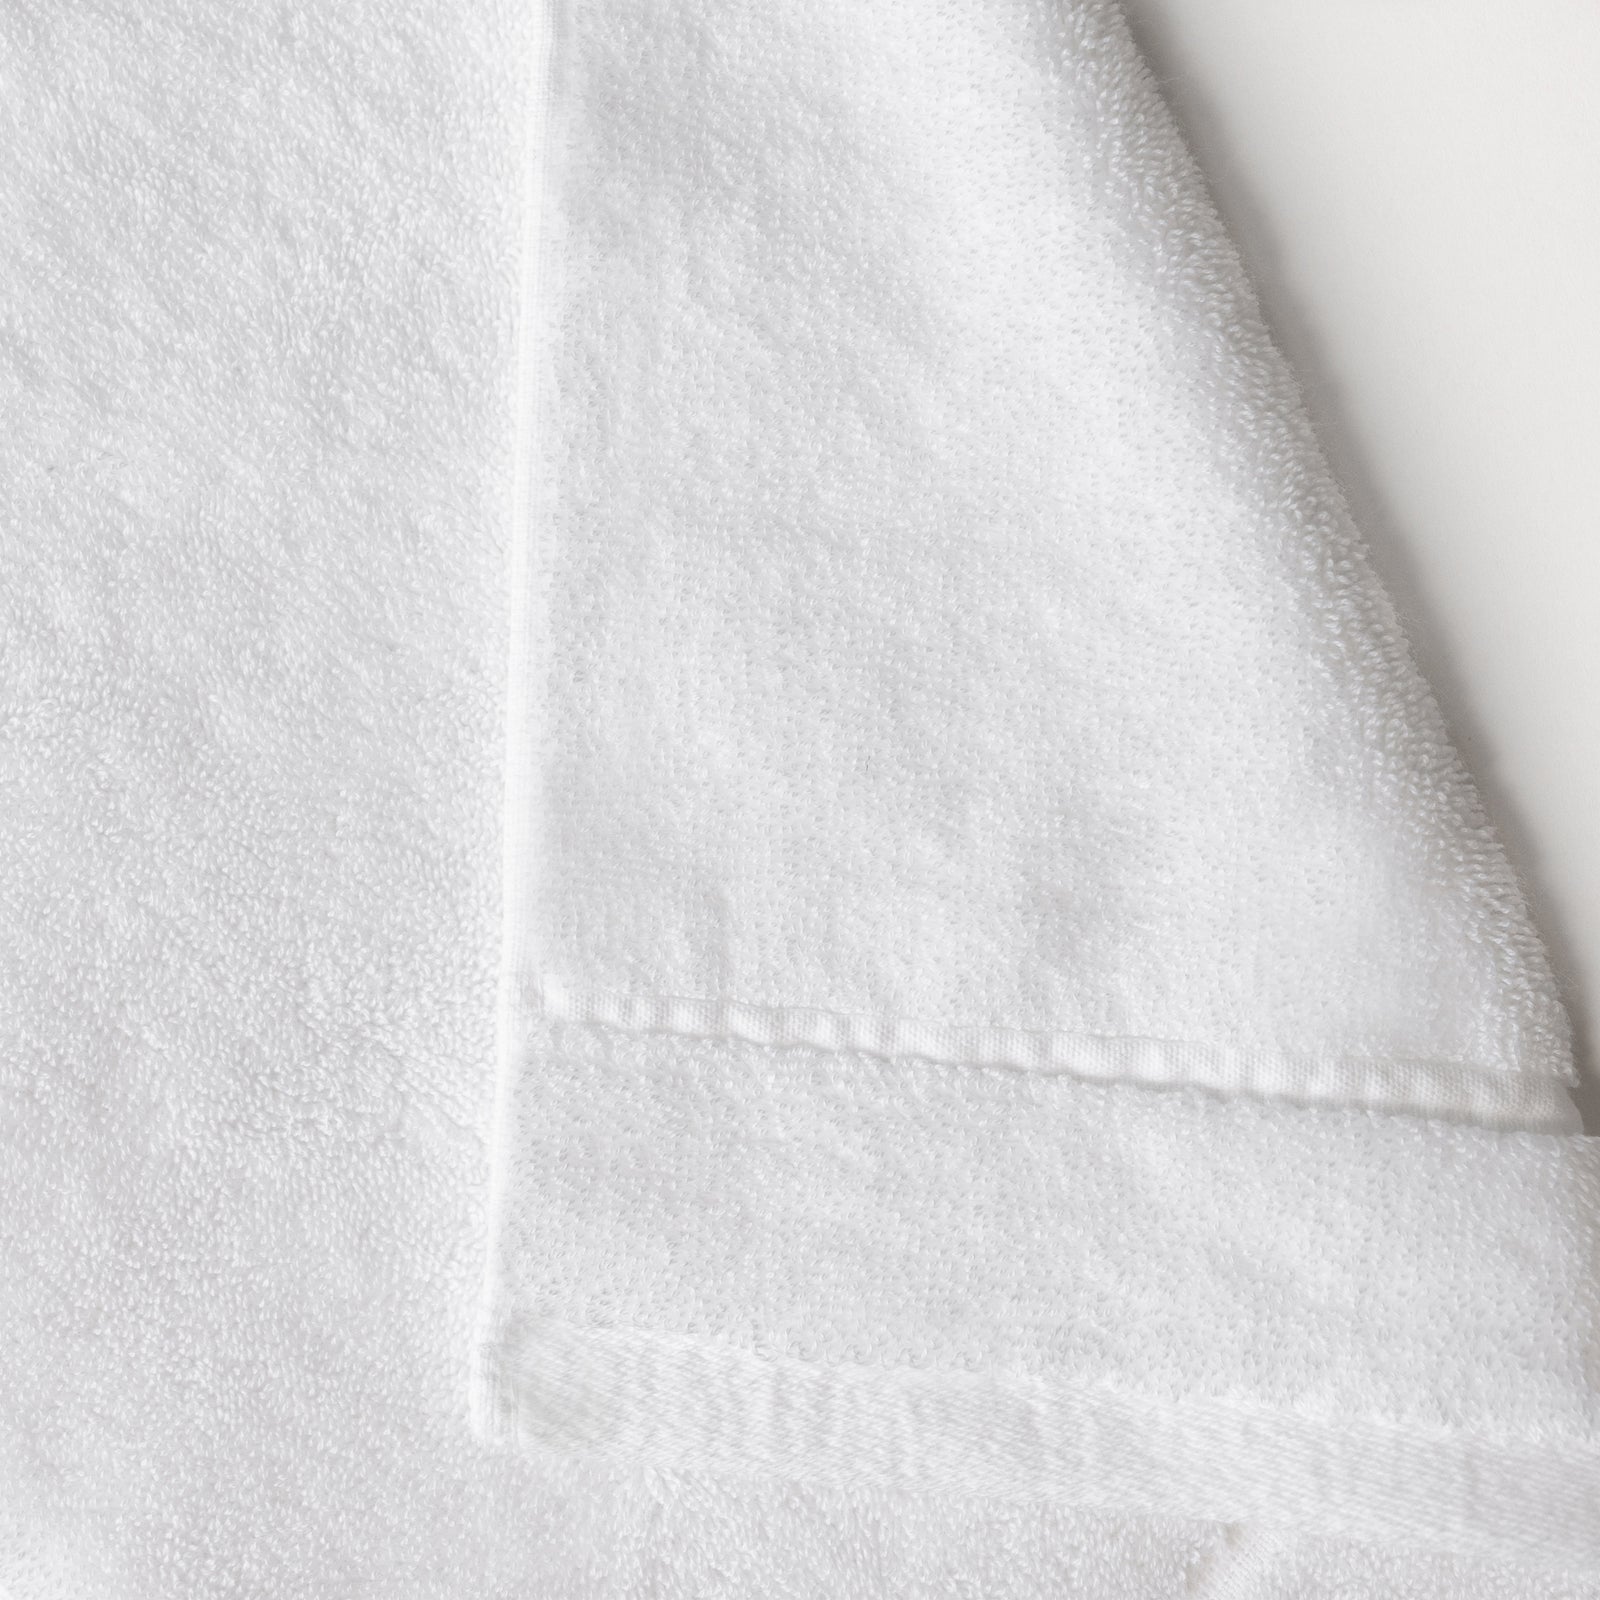 White Premium Plush Bath Towel. Photo of Premium Plush Bath Towels taken on a white background showing only the corner of the towel. 